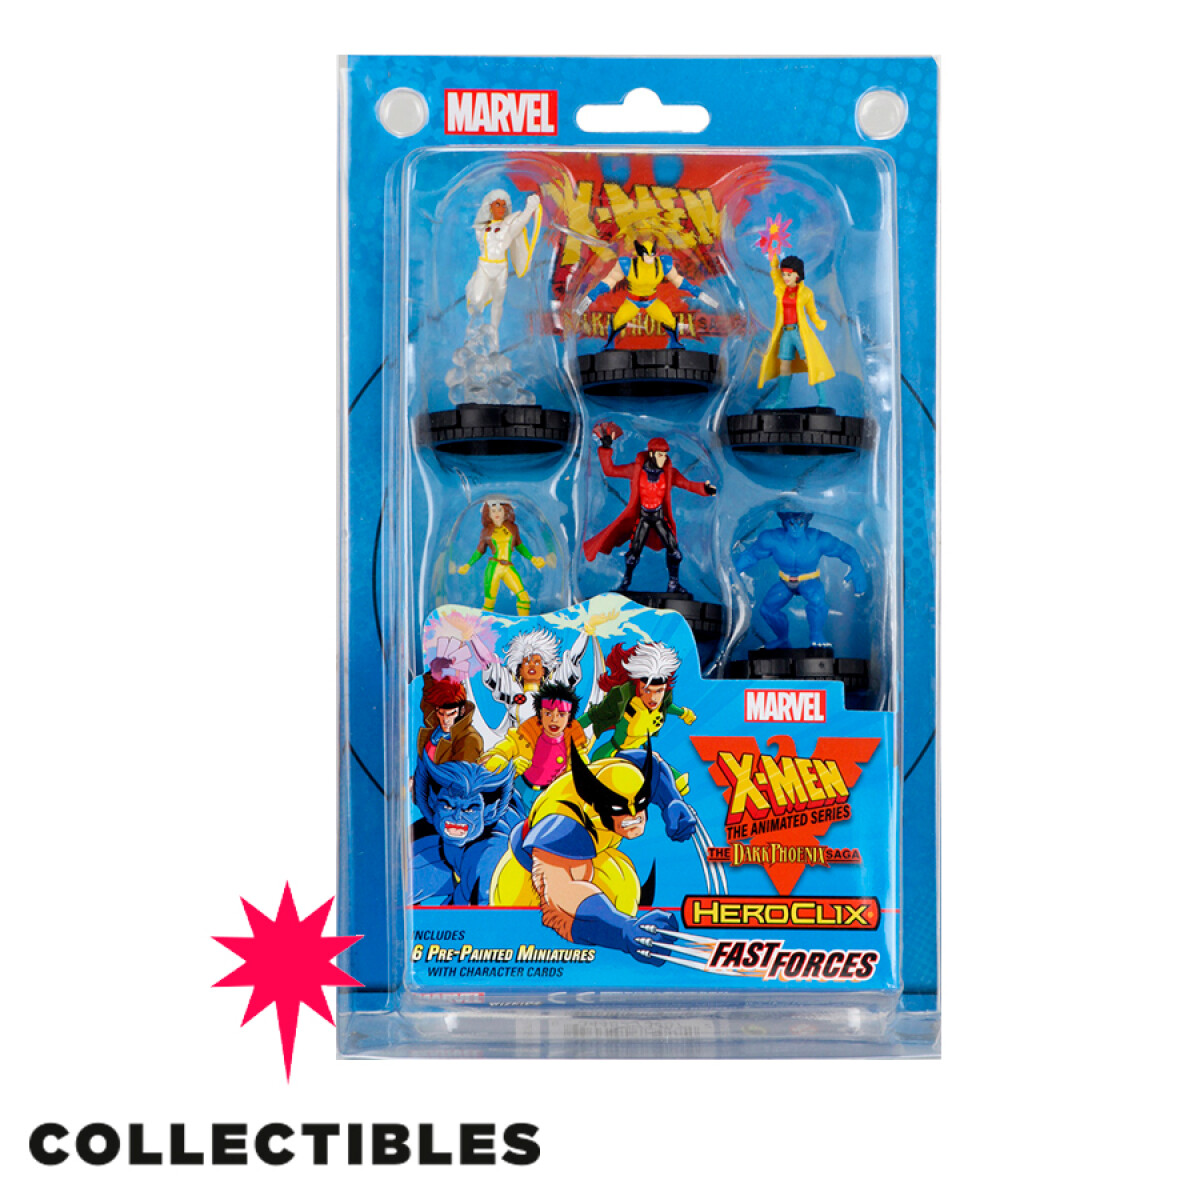 Marvel Heroclix X-men TAS - Fast Forces-Disponible 15/11/19 